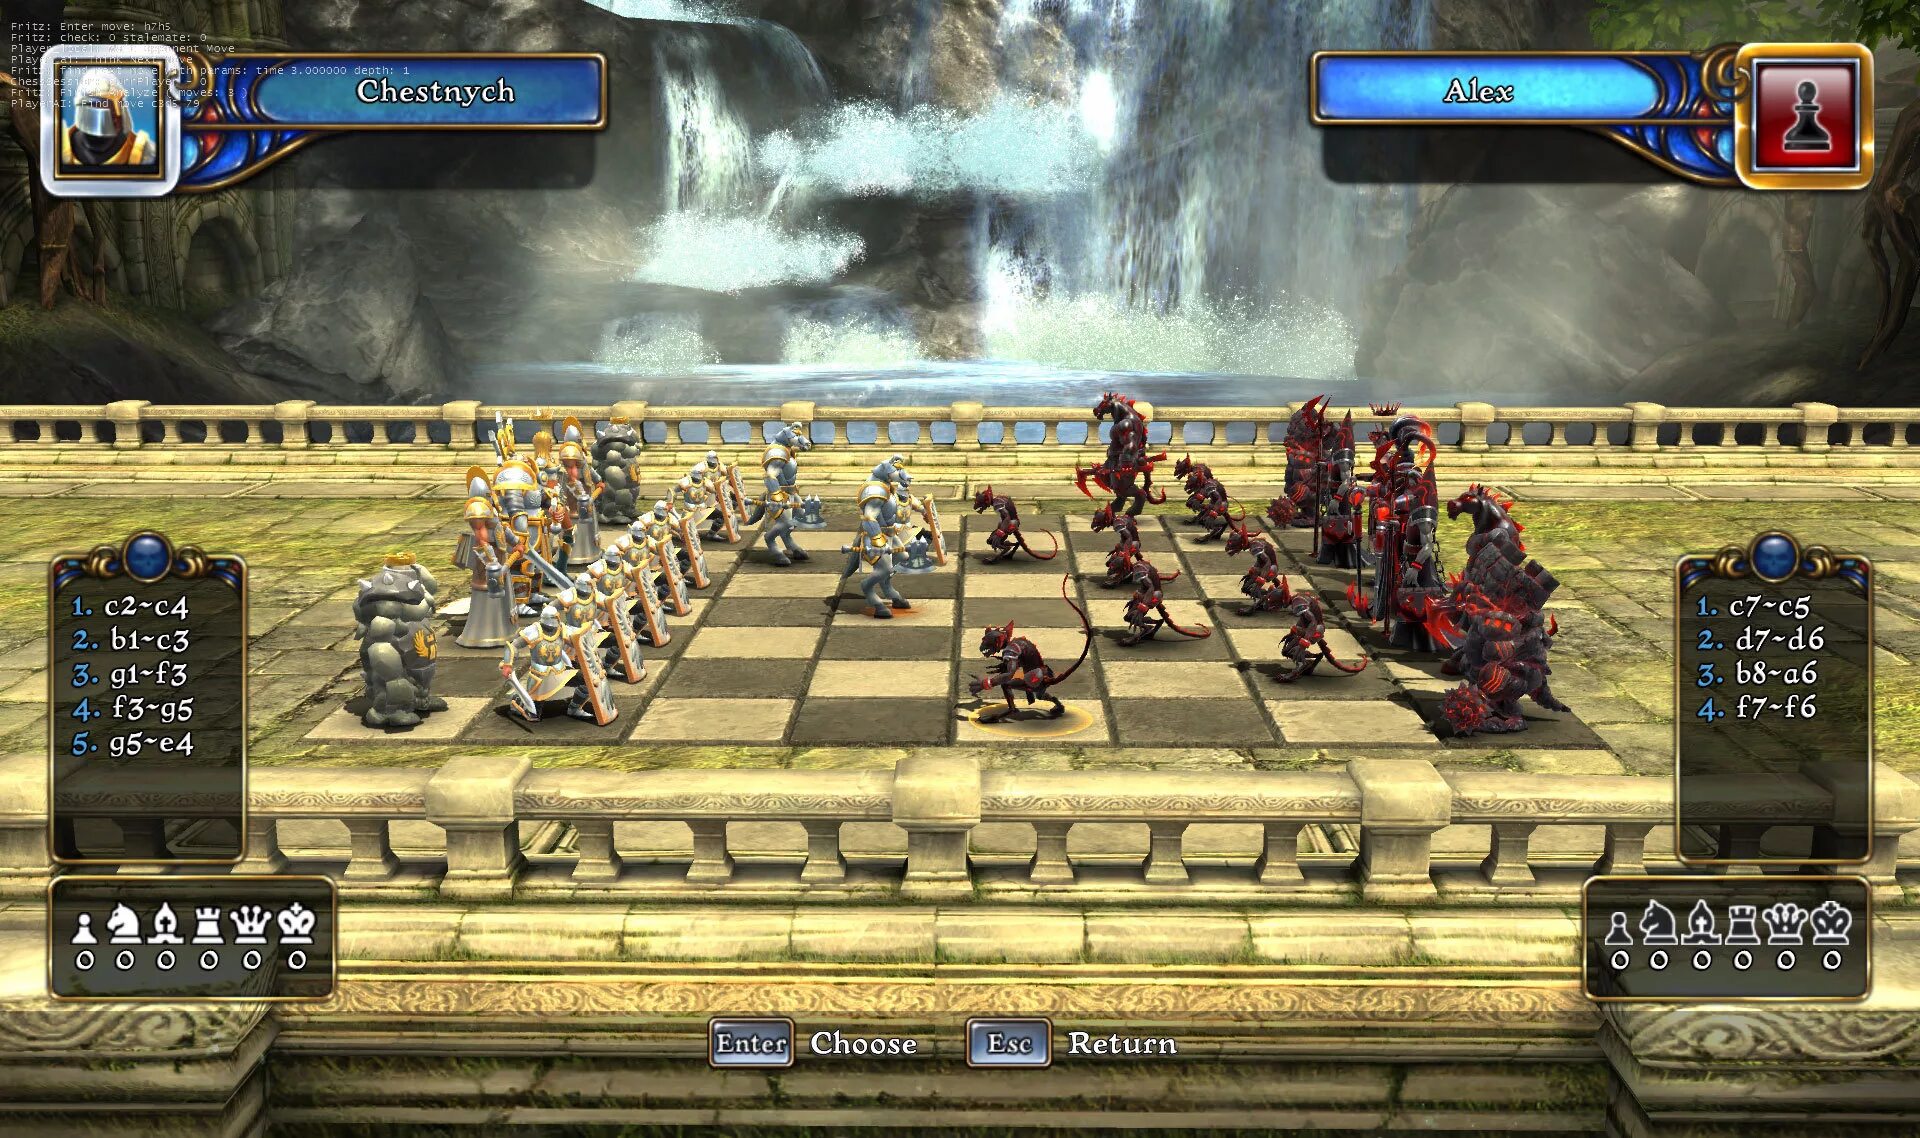 Игра Battle vs Chess. Battle Chess 1 игра. Battle vs Chess: Королевские битвы. Игры Battle Chess game of Kings. Игры битвы старые